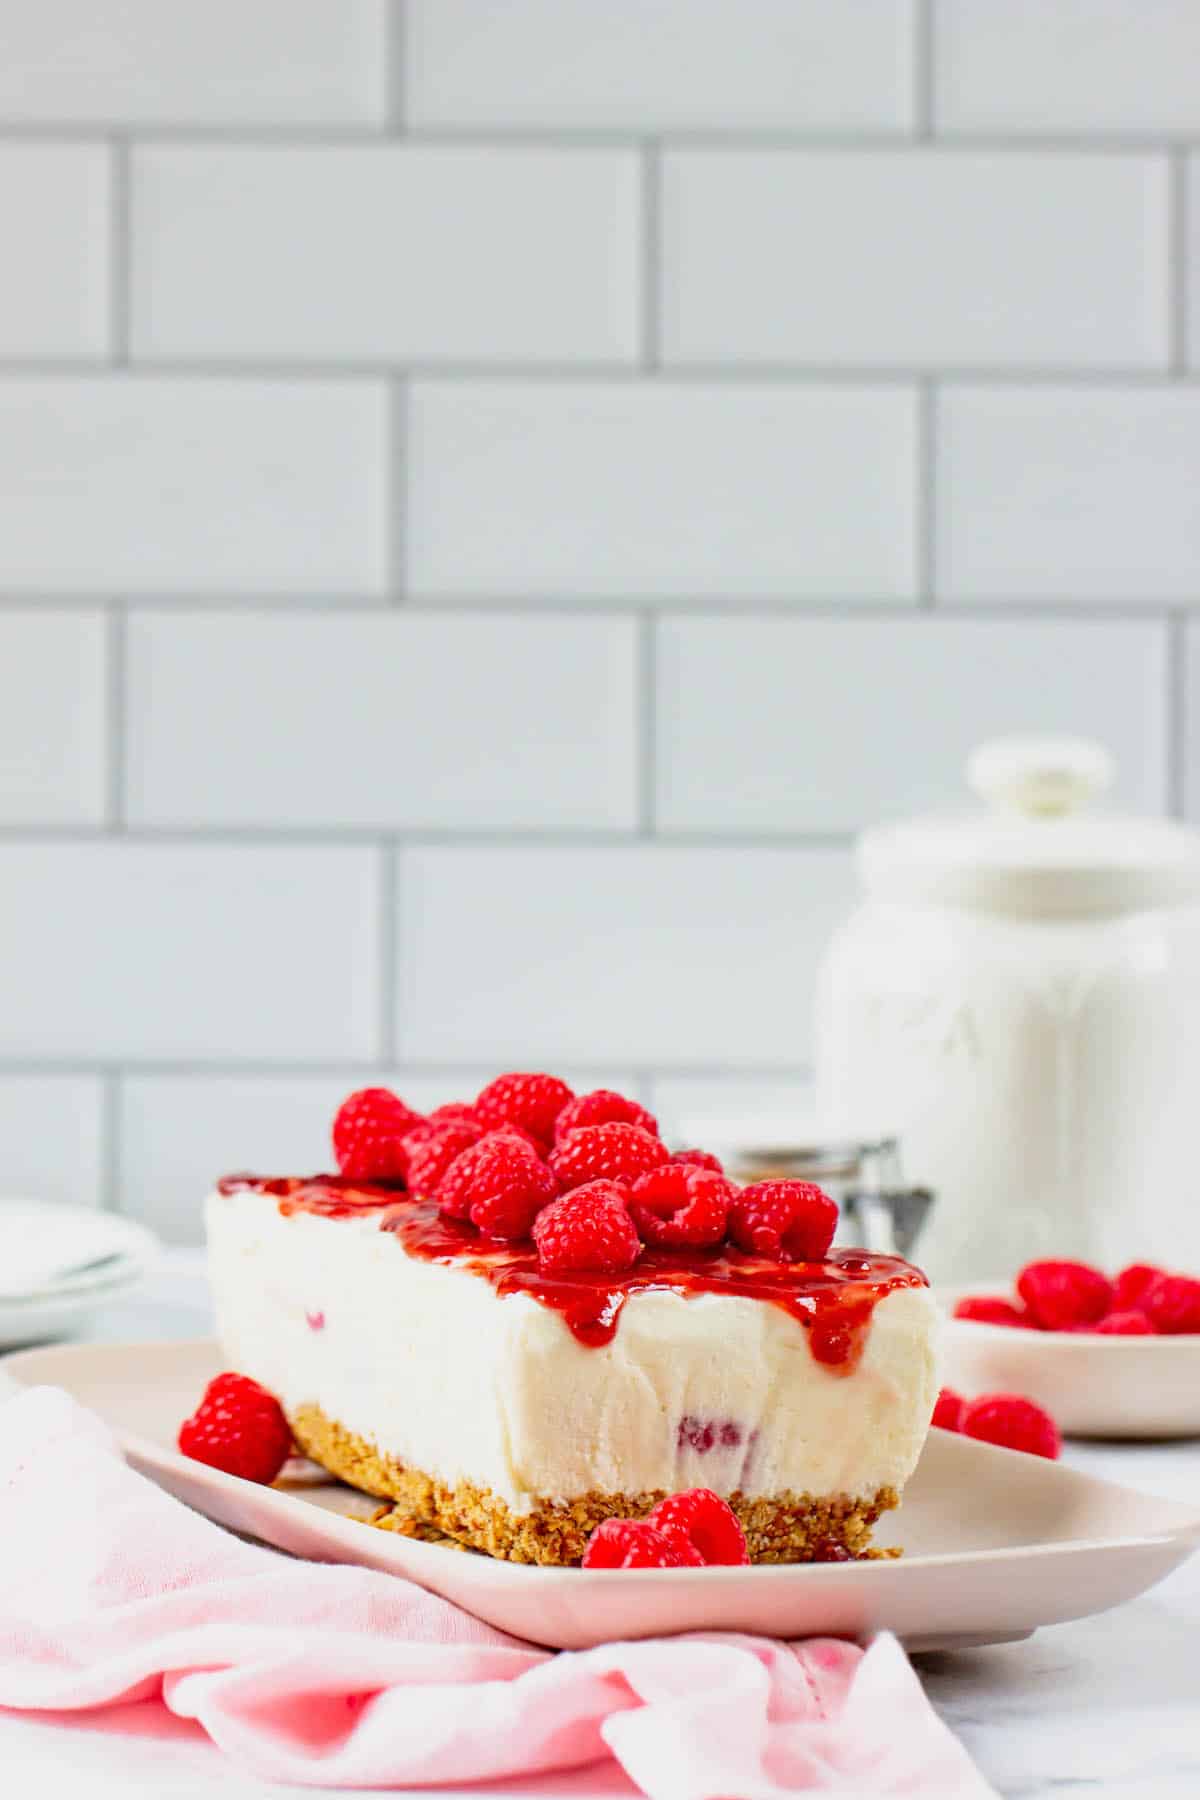 Frozen white chocolate raspberry dessert topped with fresh raspberries